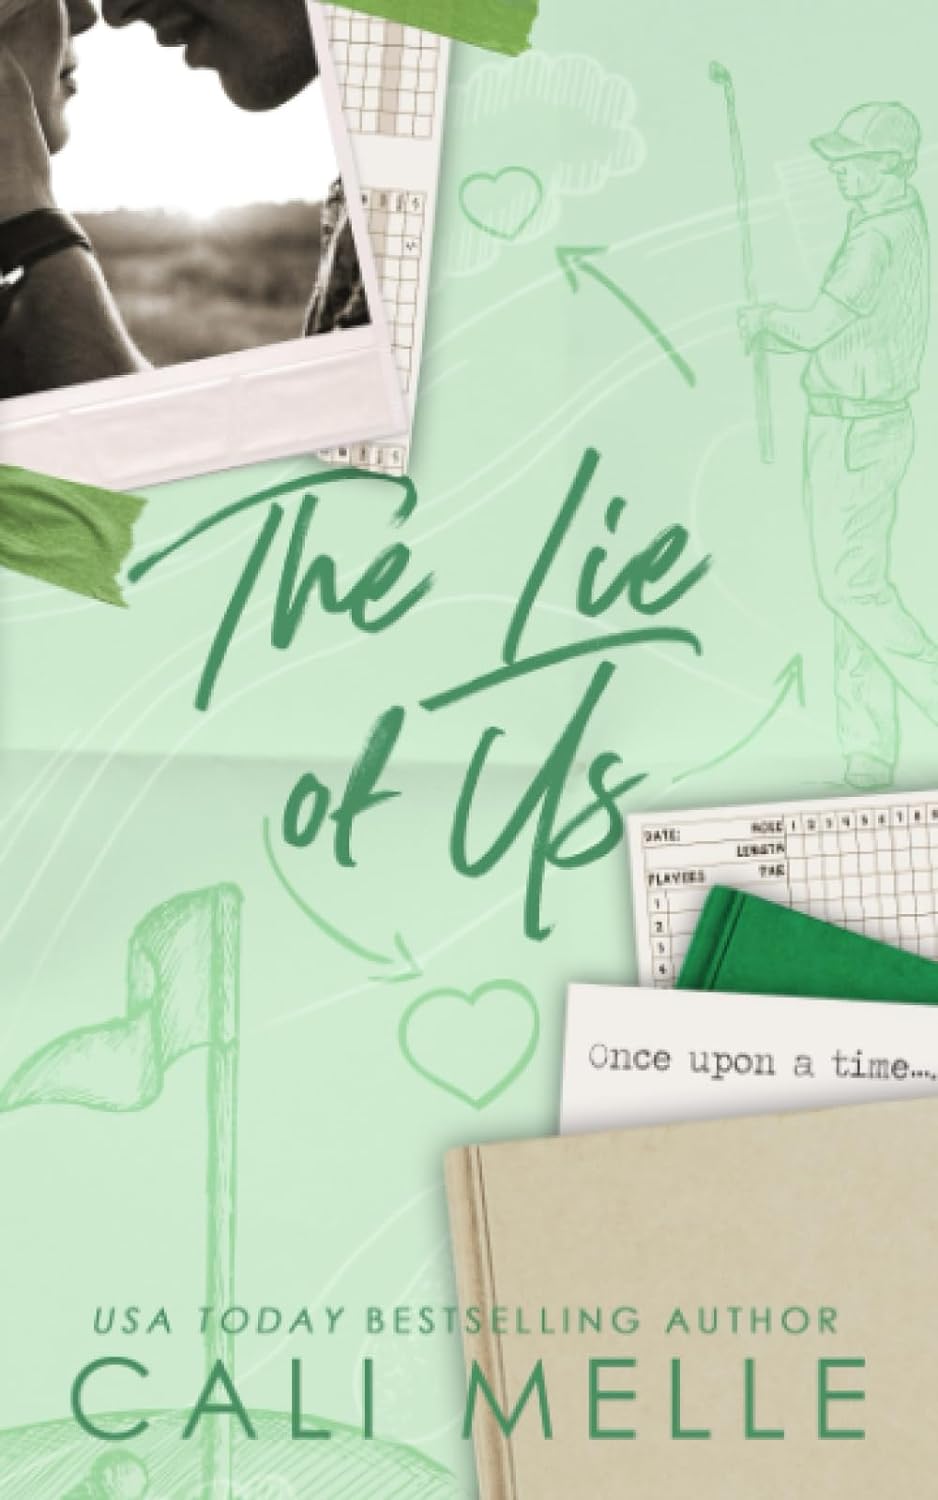 The Lie of Us - Cali Melle